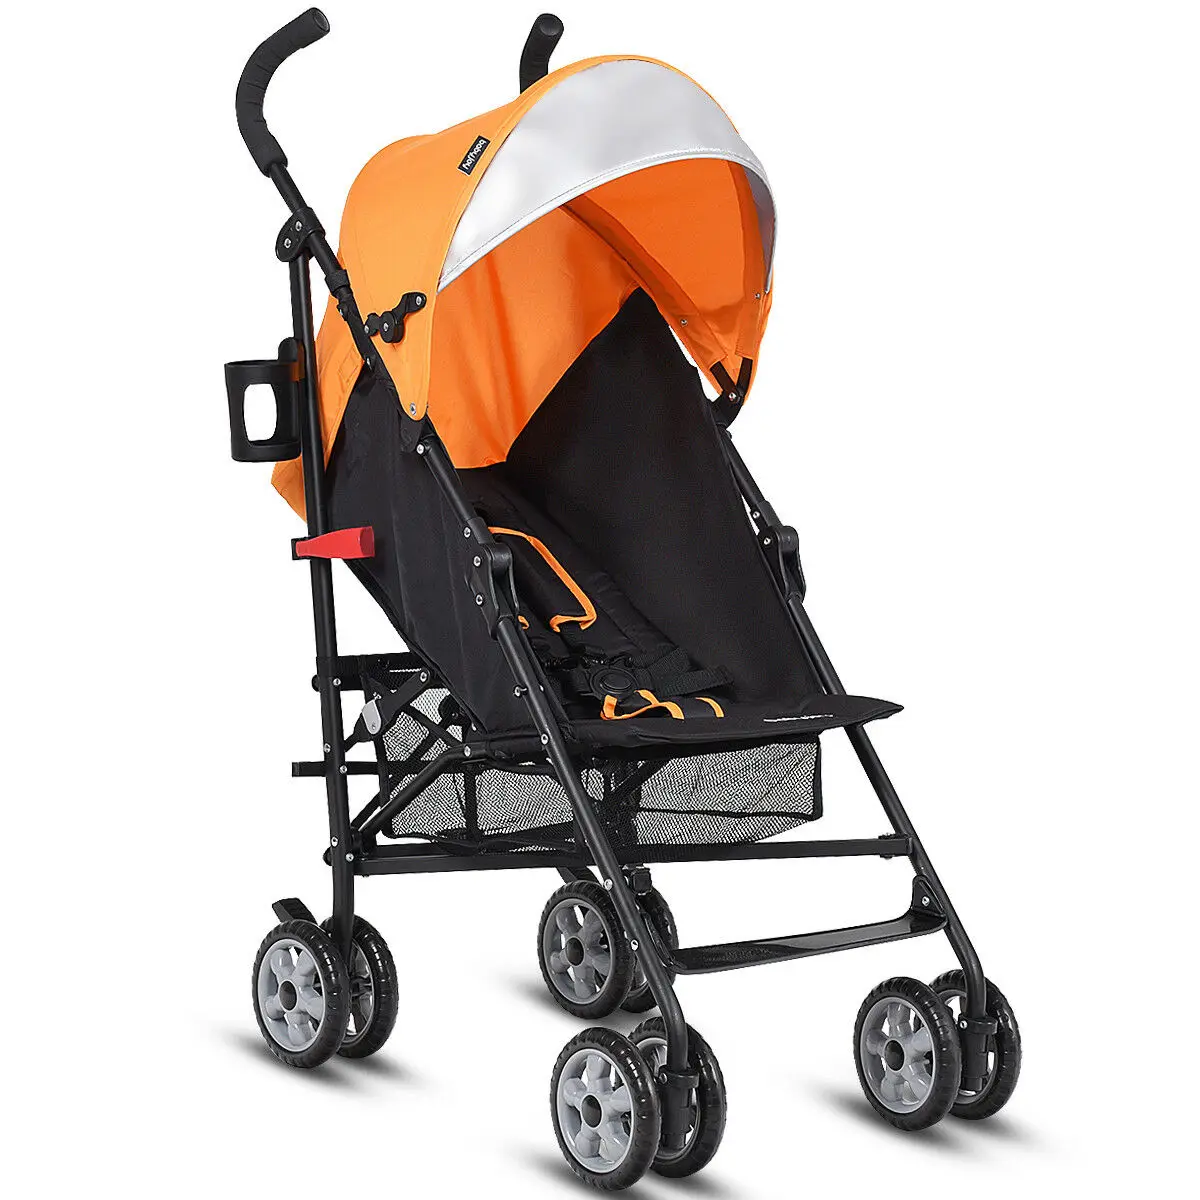 Folding Lightweight Baby Toddler Umbrella Travel Stroller w/ Storage Basket BB4880YE